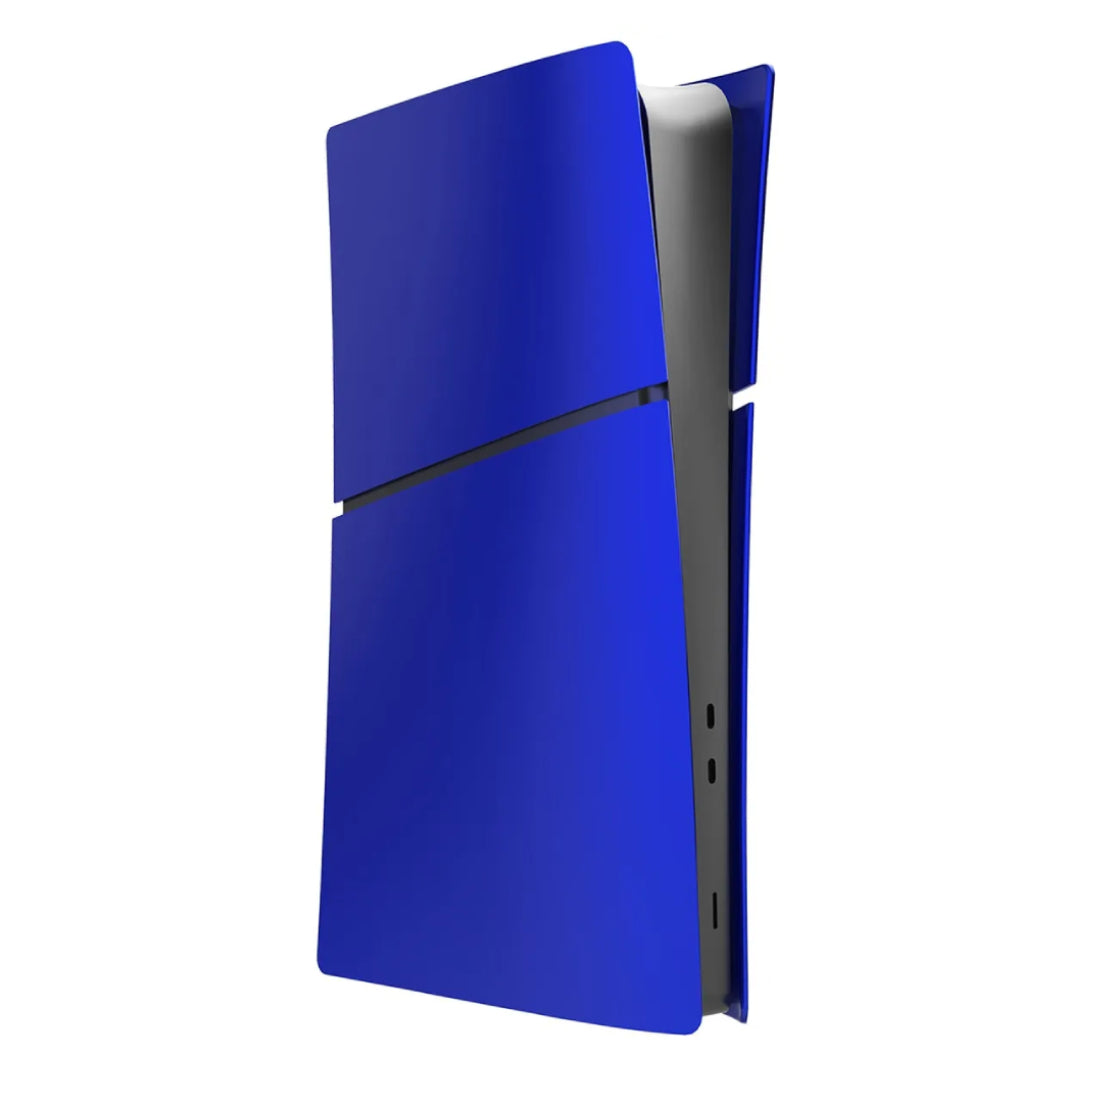 Faceplate Slim Plastic Cover For Playstation 5 - Digital Edition - Blue - أكسسوار